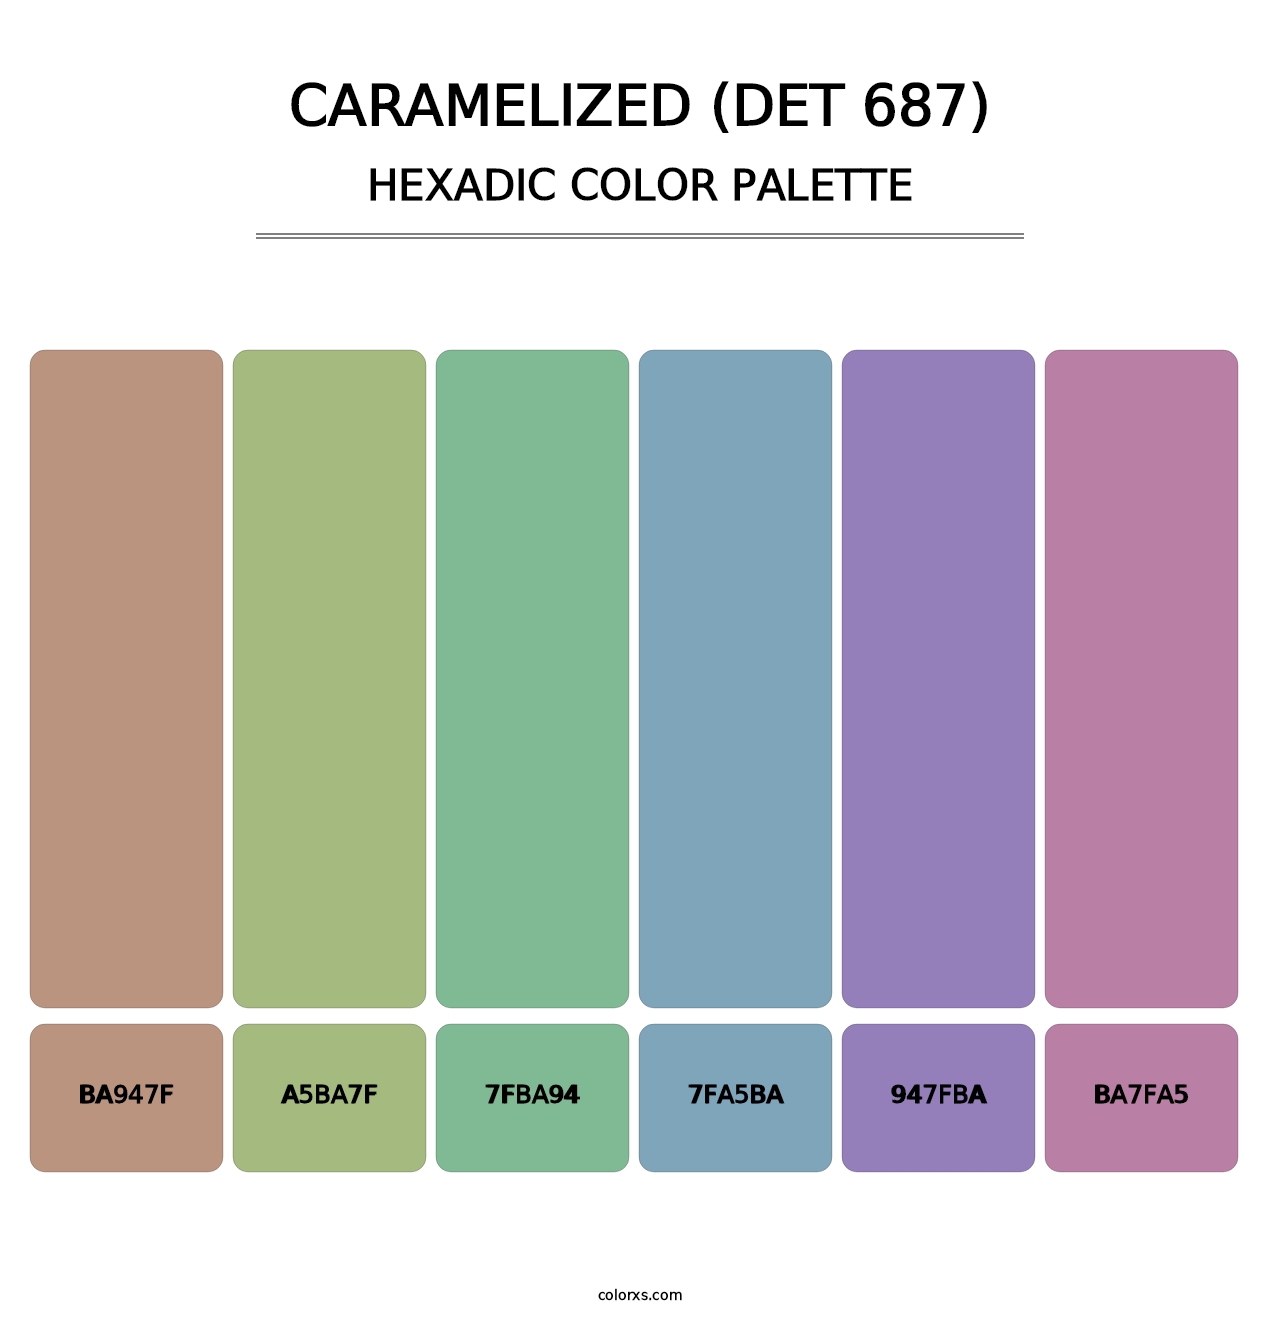 Caramelized (DET 687) - Hexadic Color Palette